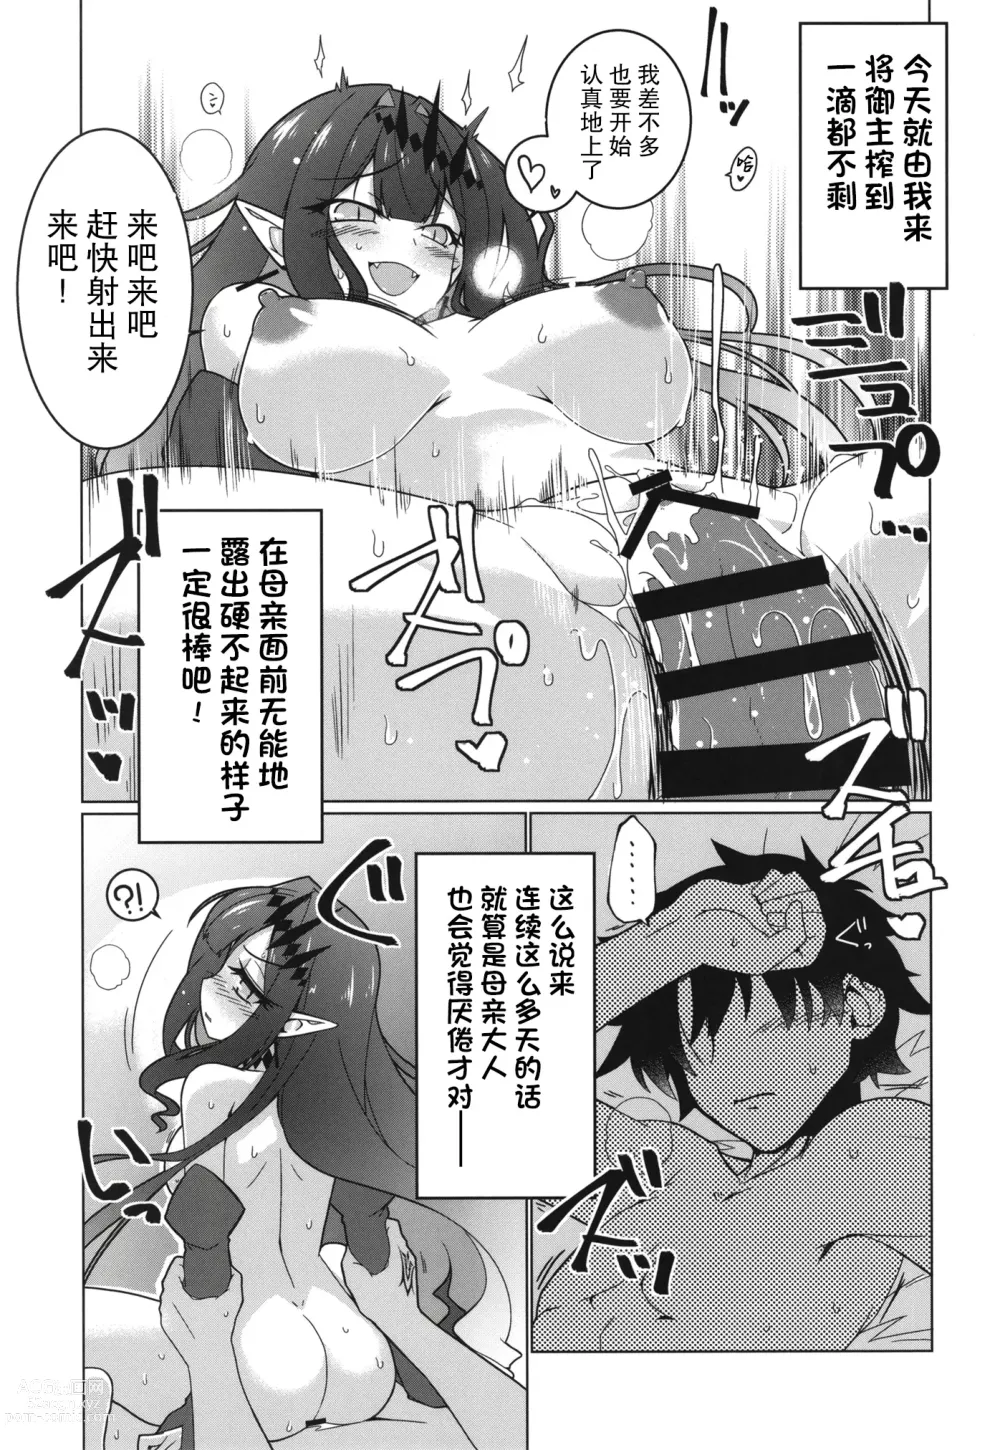 Page 8 of doujinshi 此刻汝眼前皆梦中所见